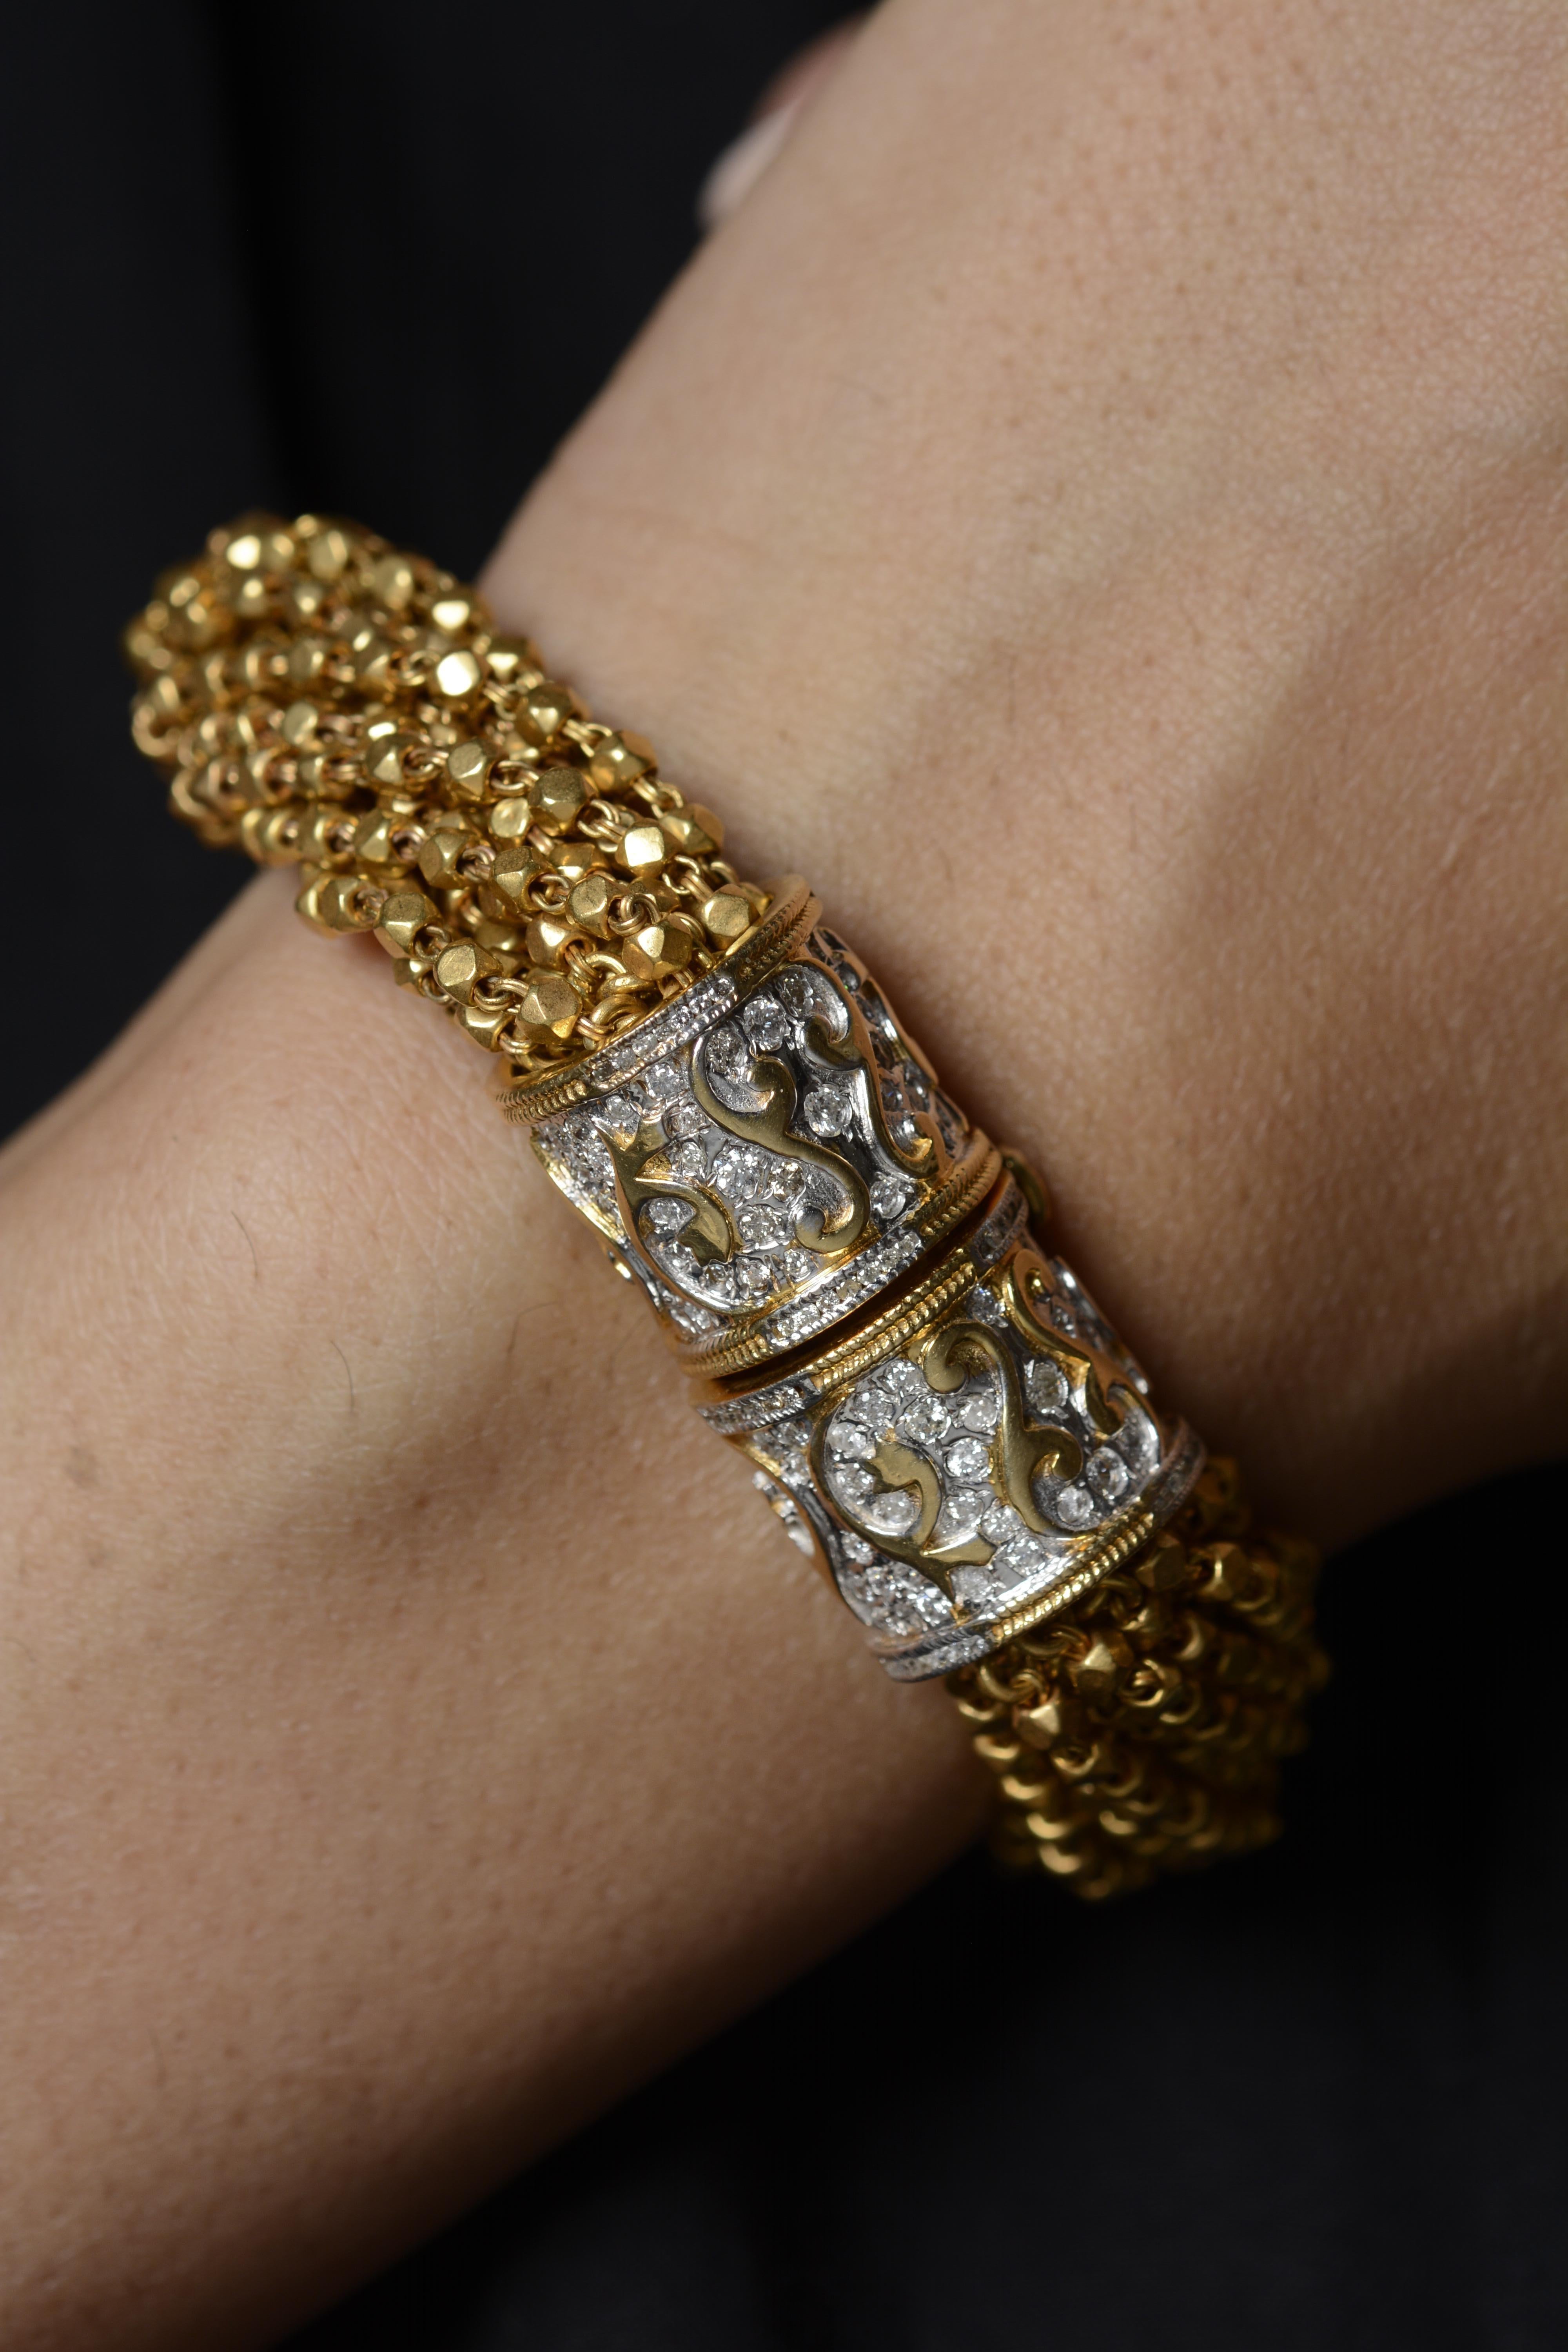 22 karat gold jewelry